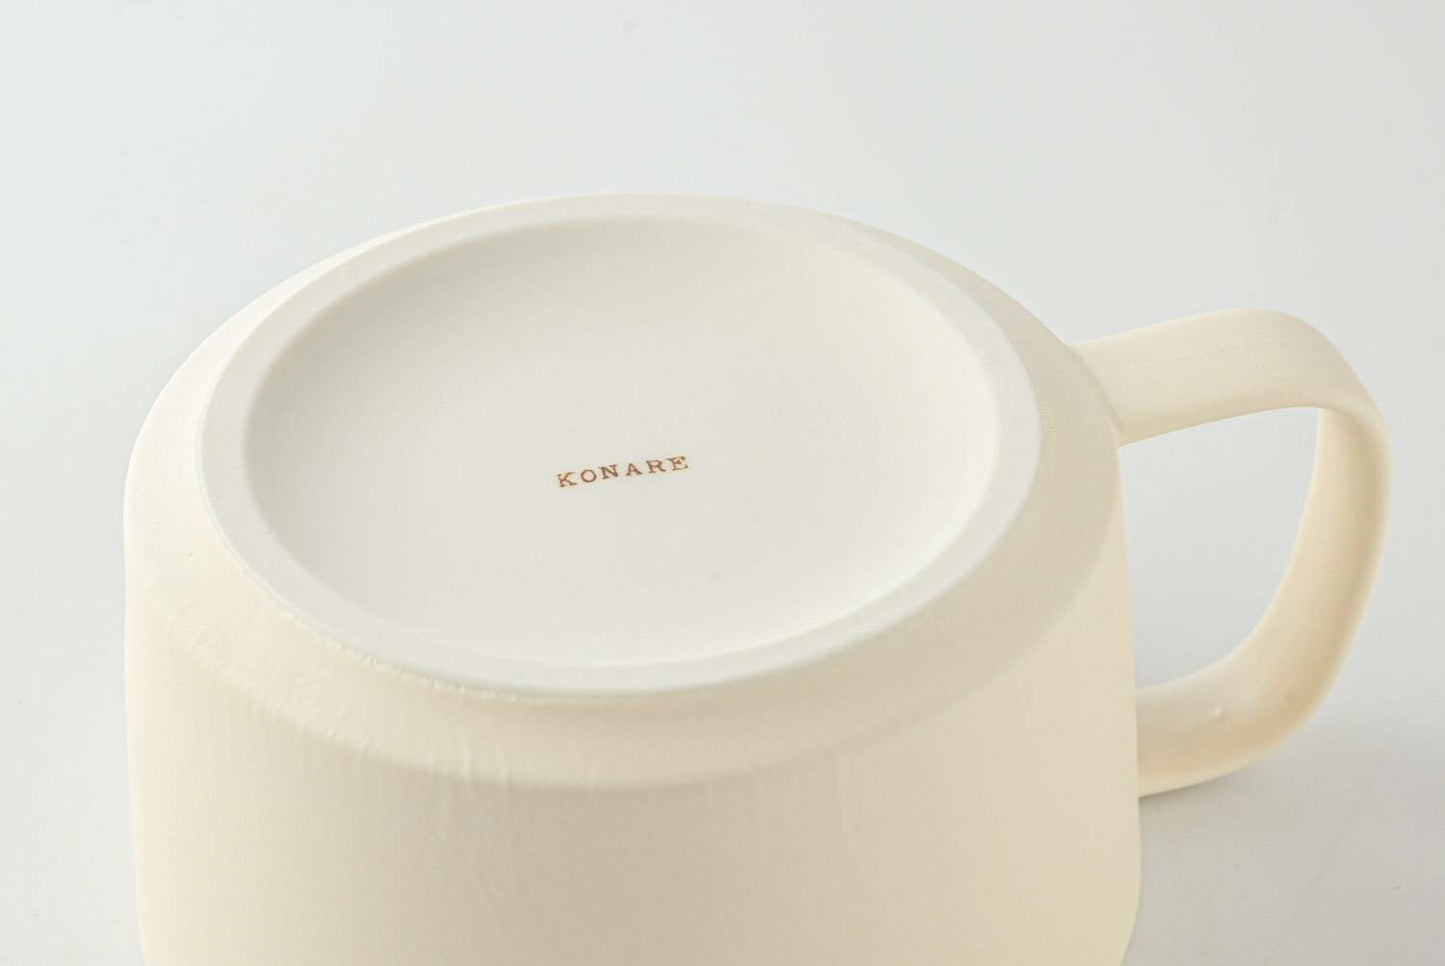 Yamatsu KONARE "moment" coffee mug and saucer - Cream Color 晋山窯